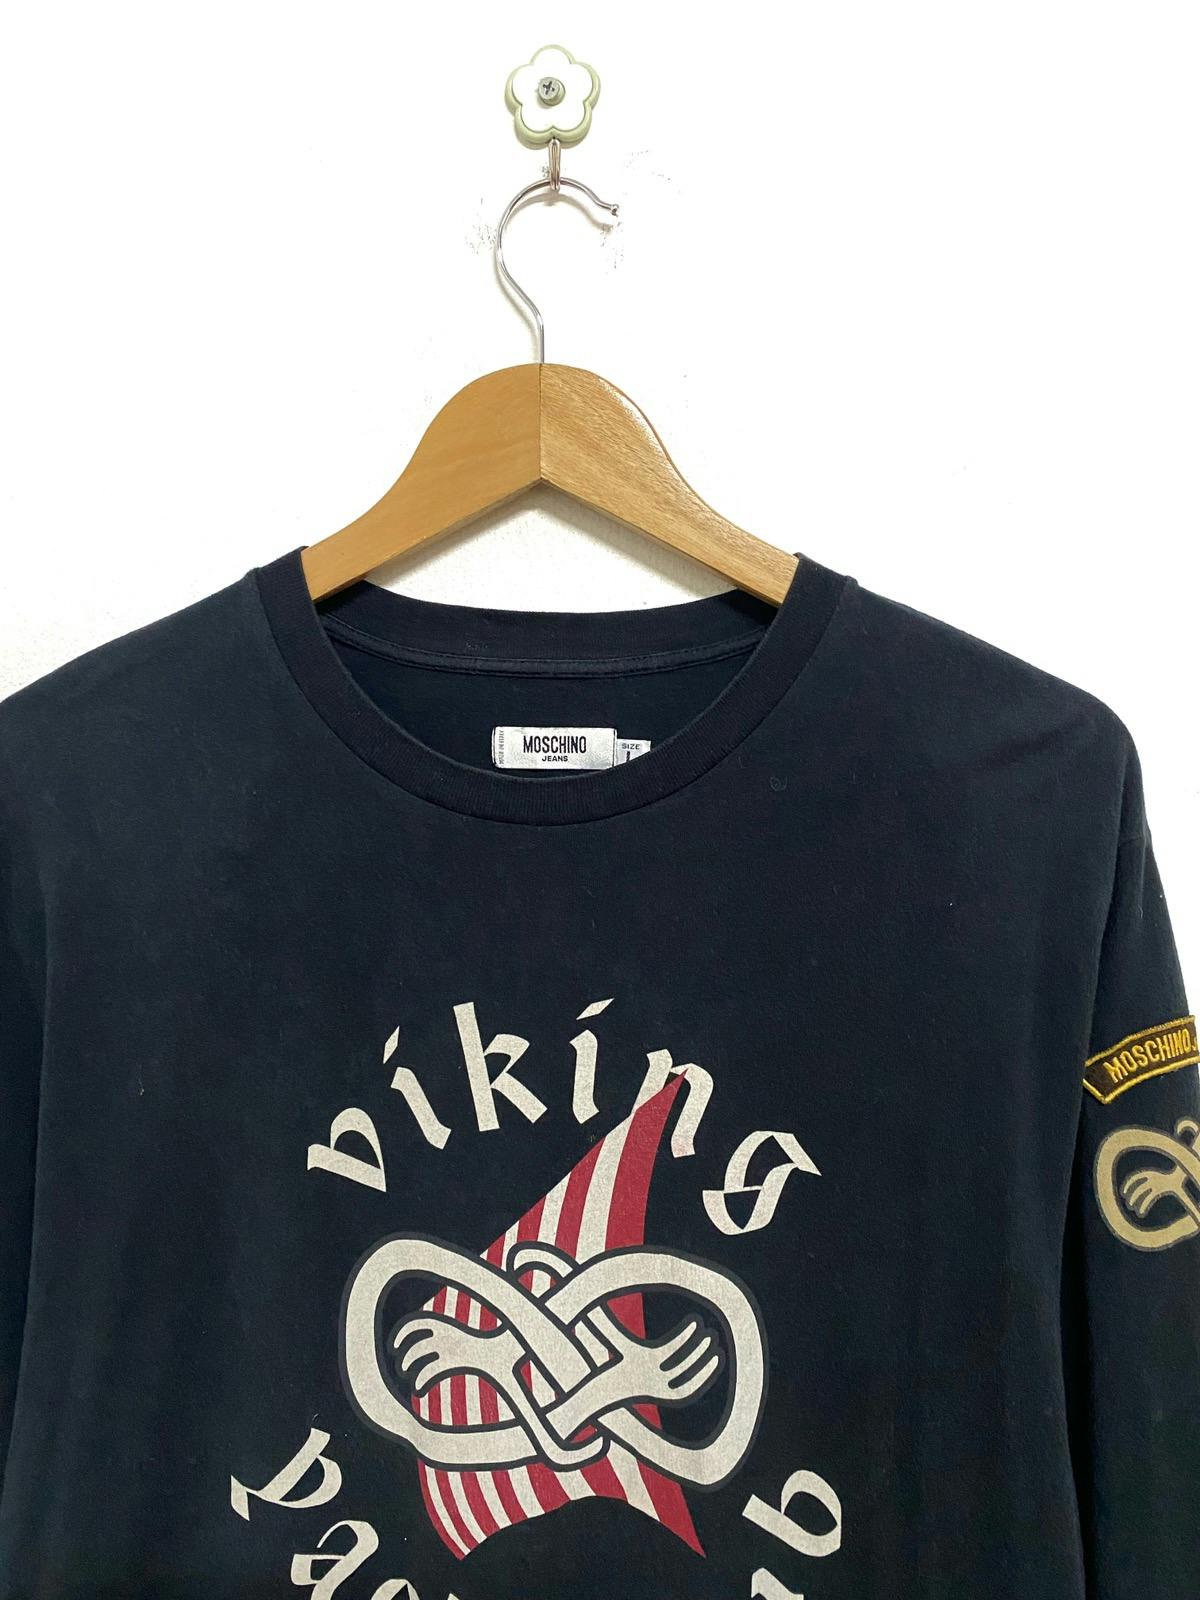 Moschino Viking Yact Club Long Sleeve Tshirt Made in Italy - 2